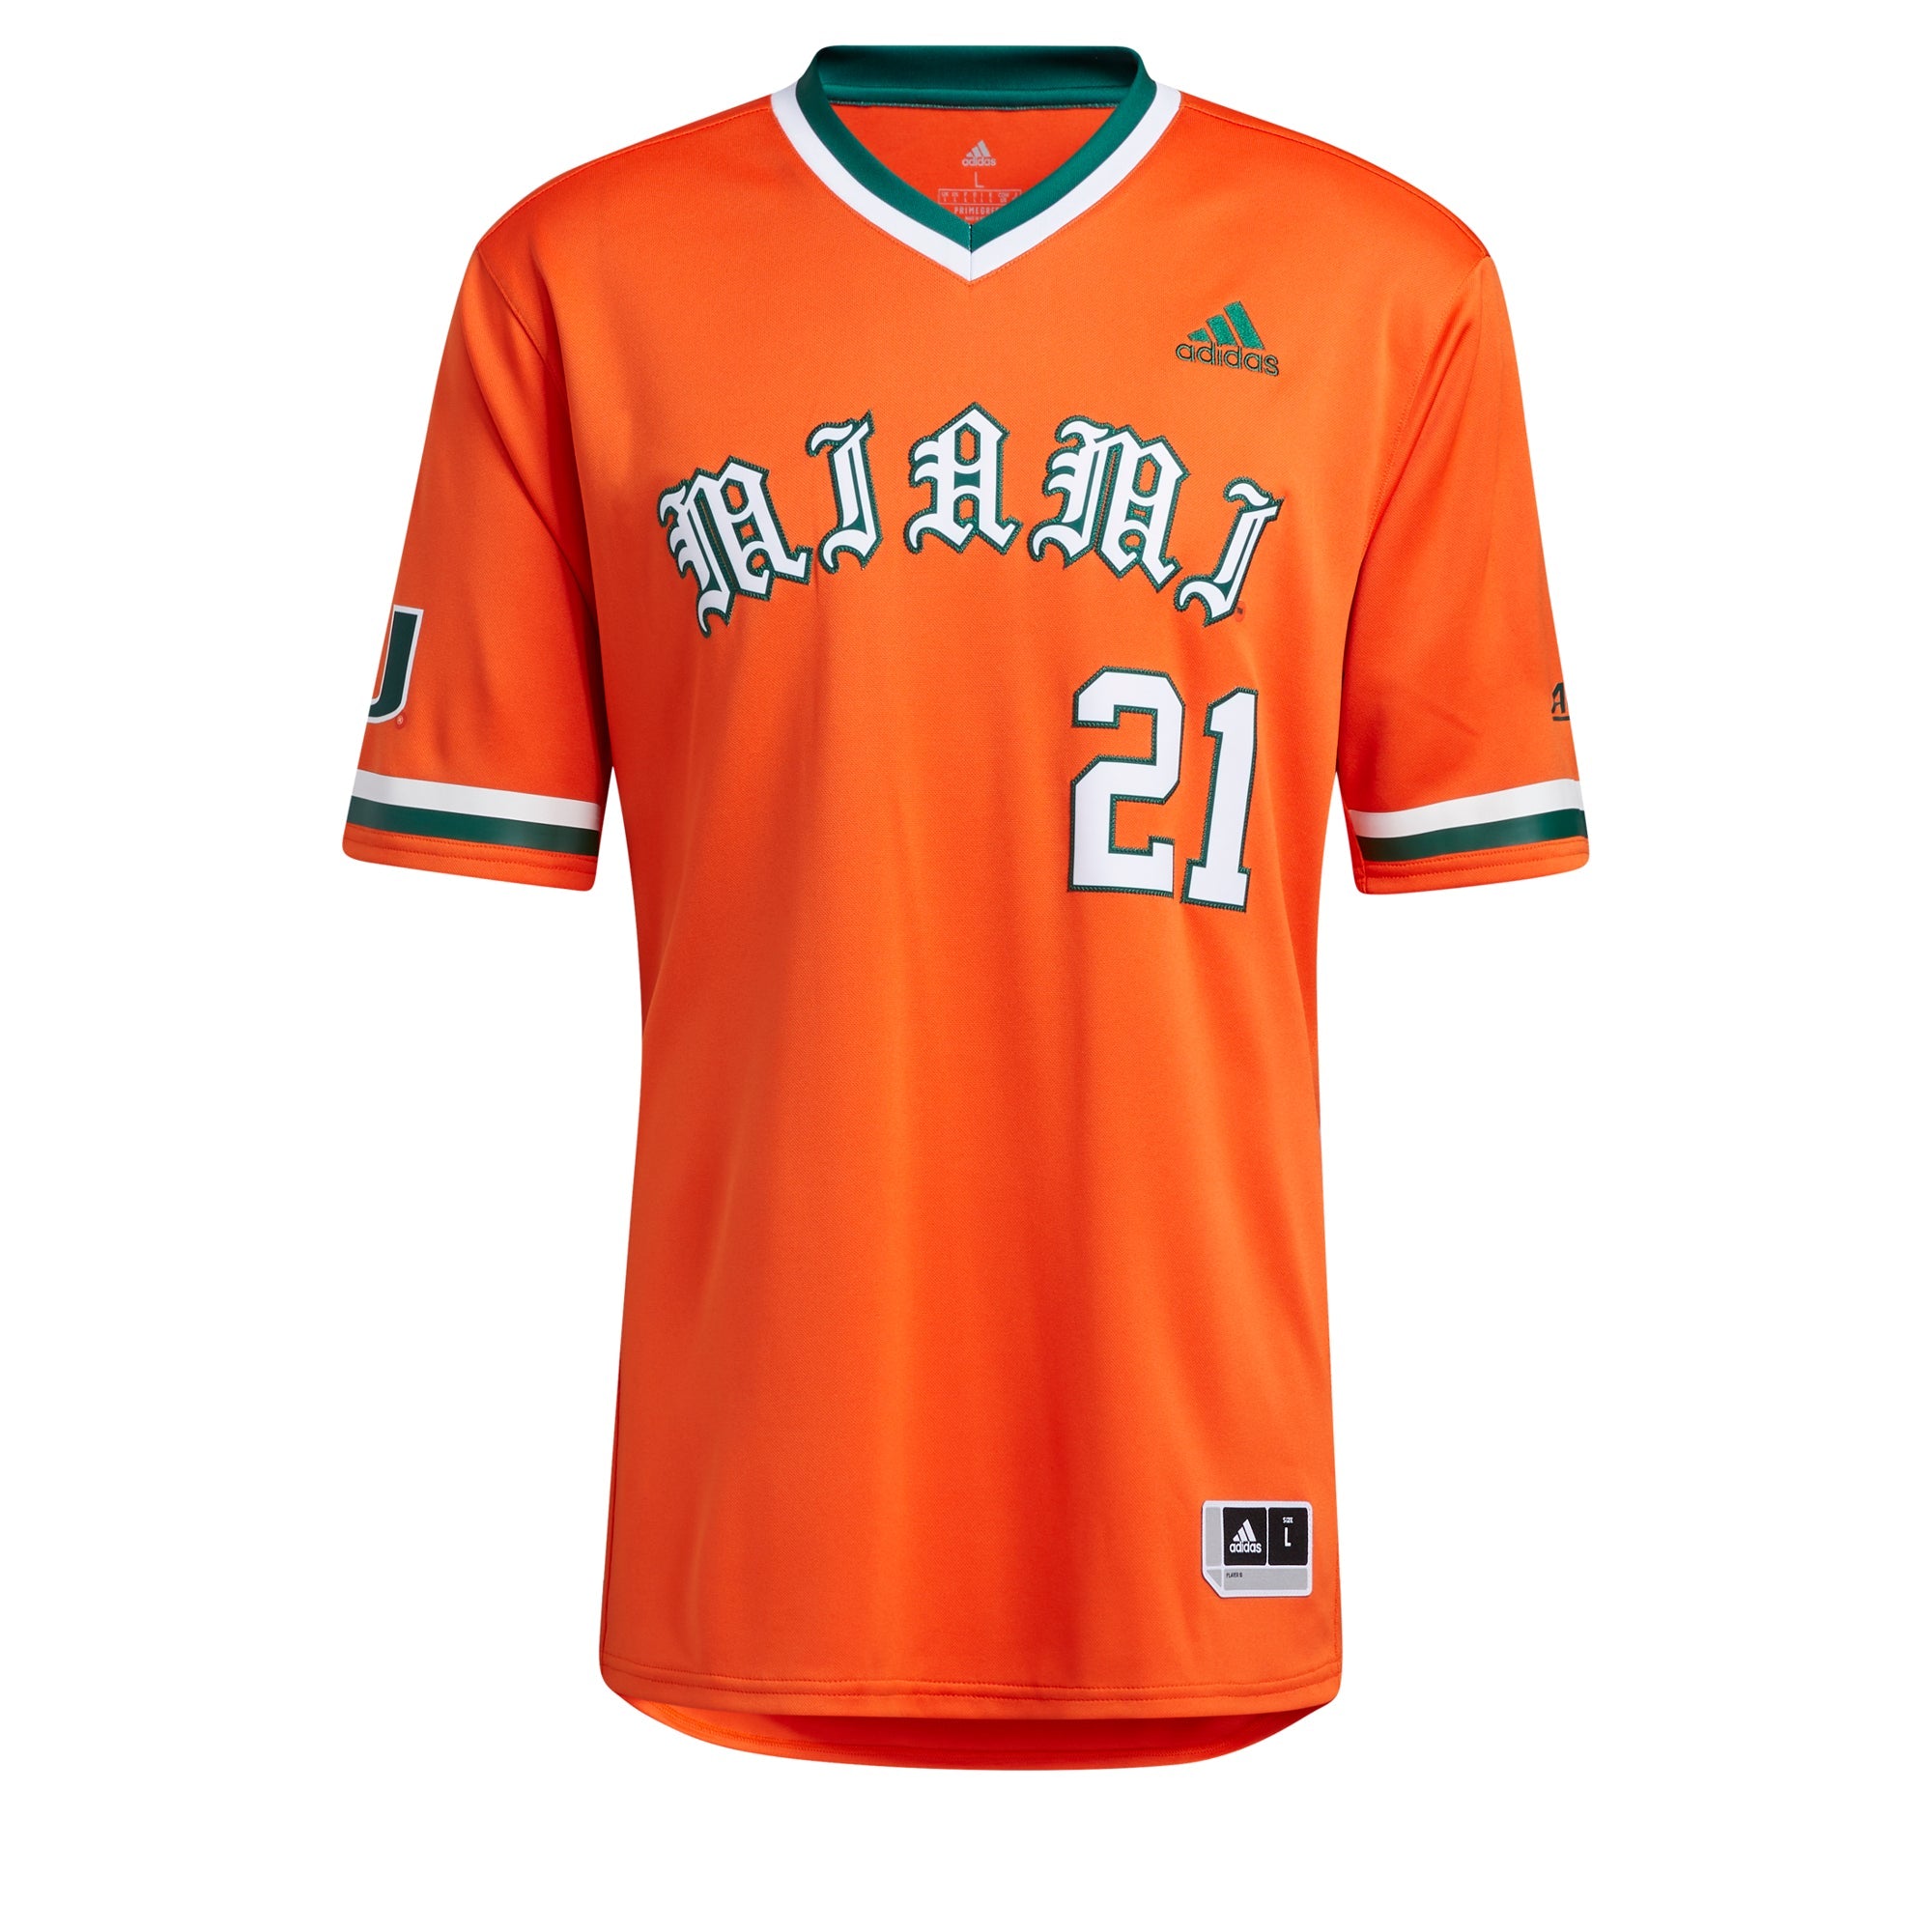 New Men’s Miami Heat Baseball Jersey-cool XL